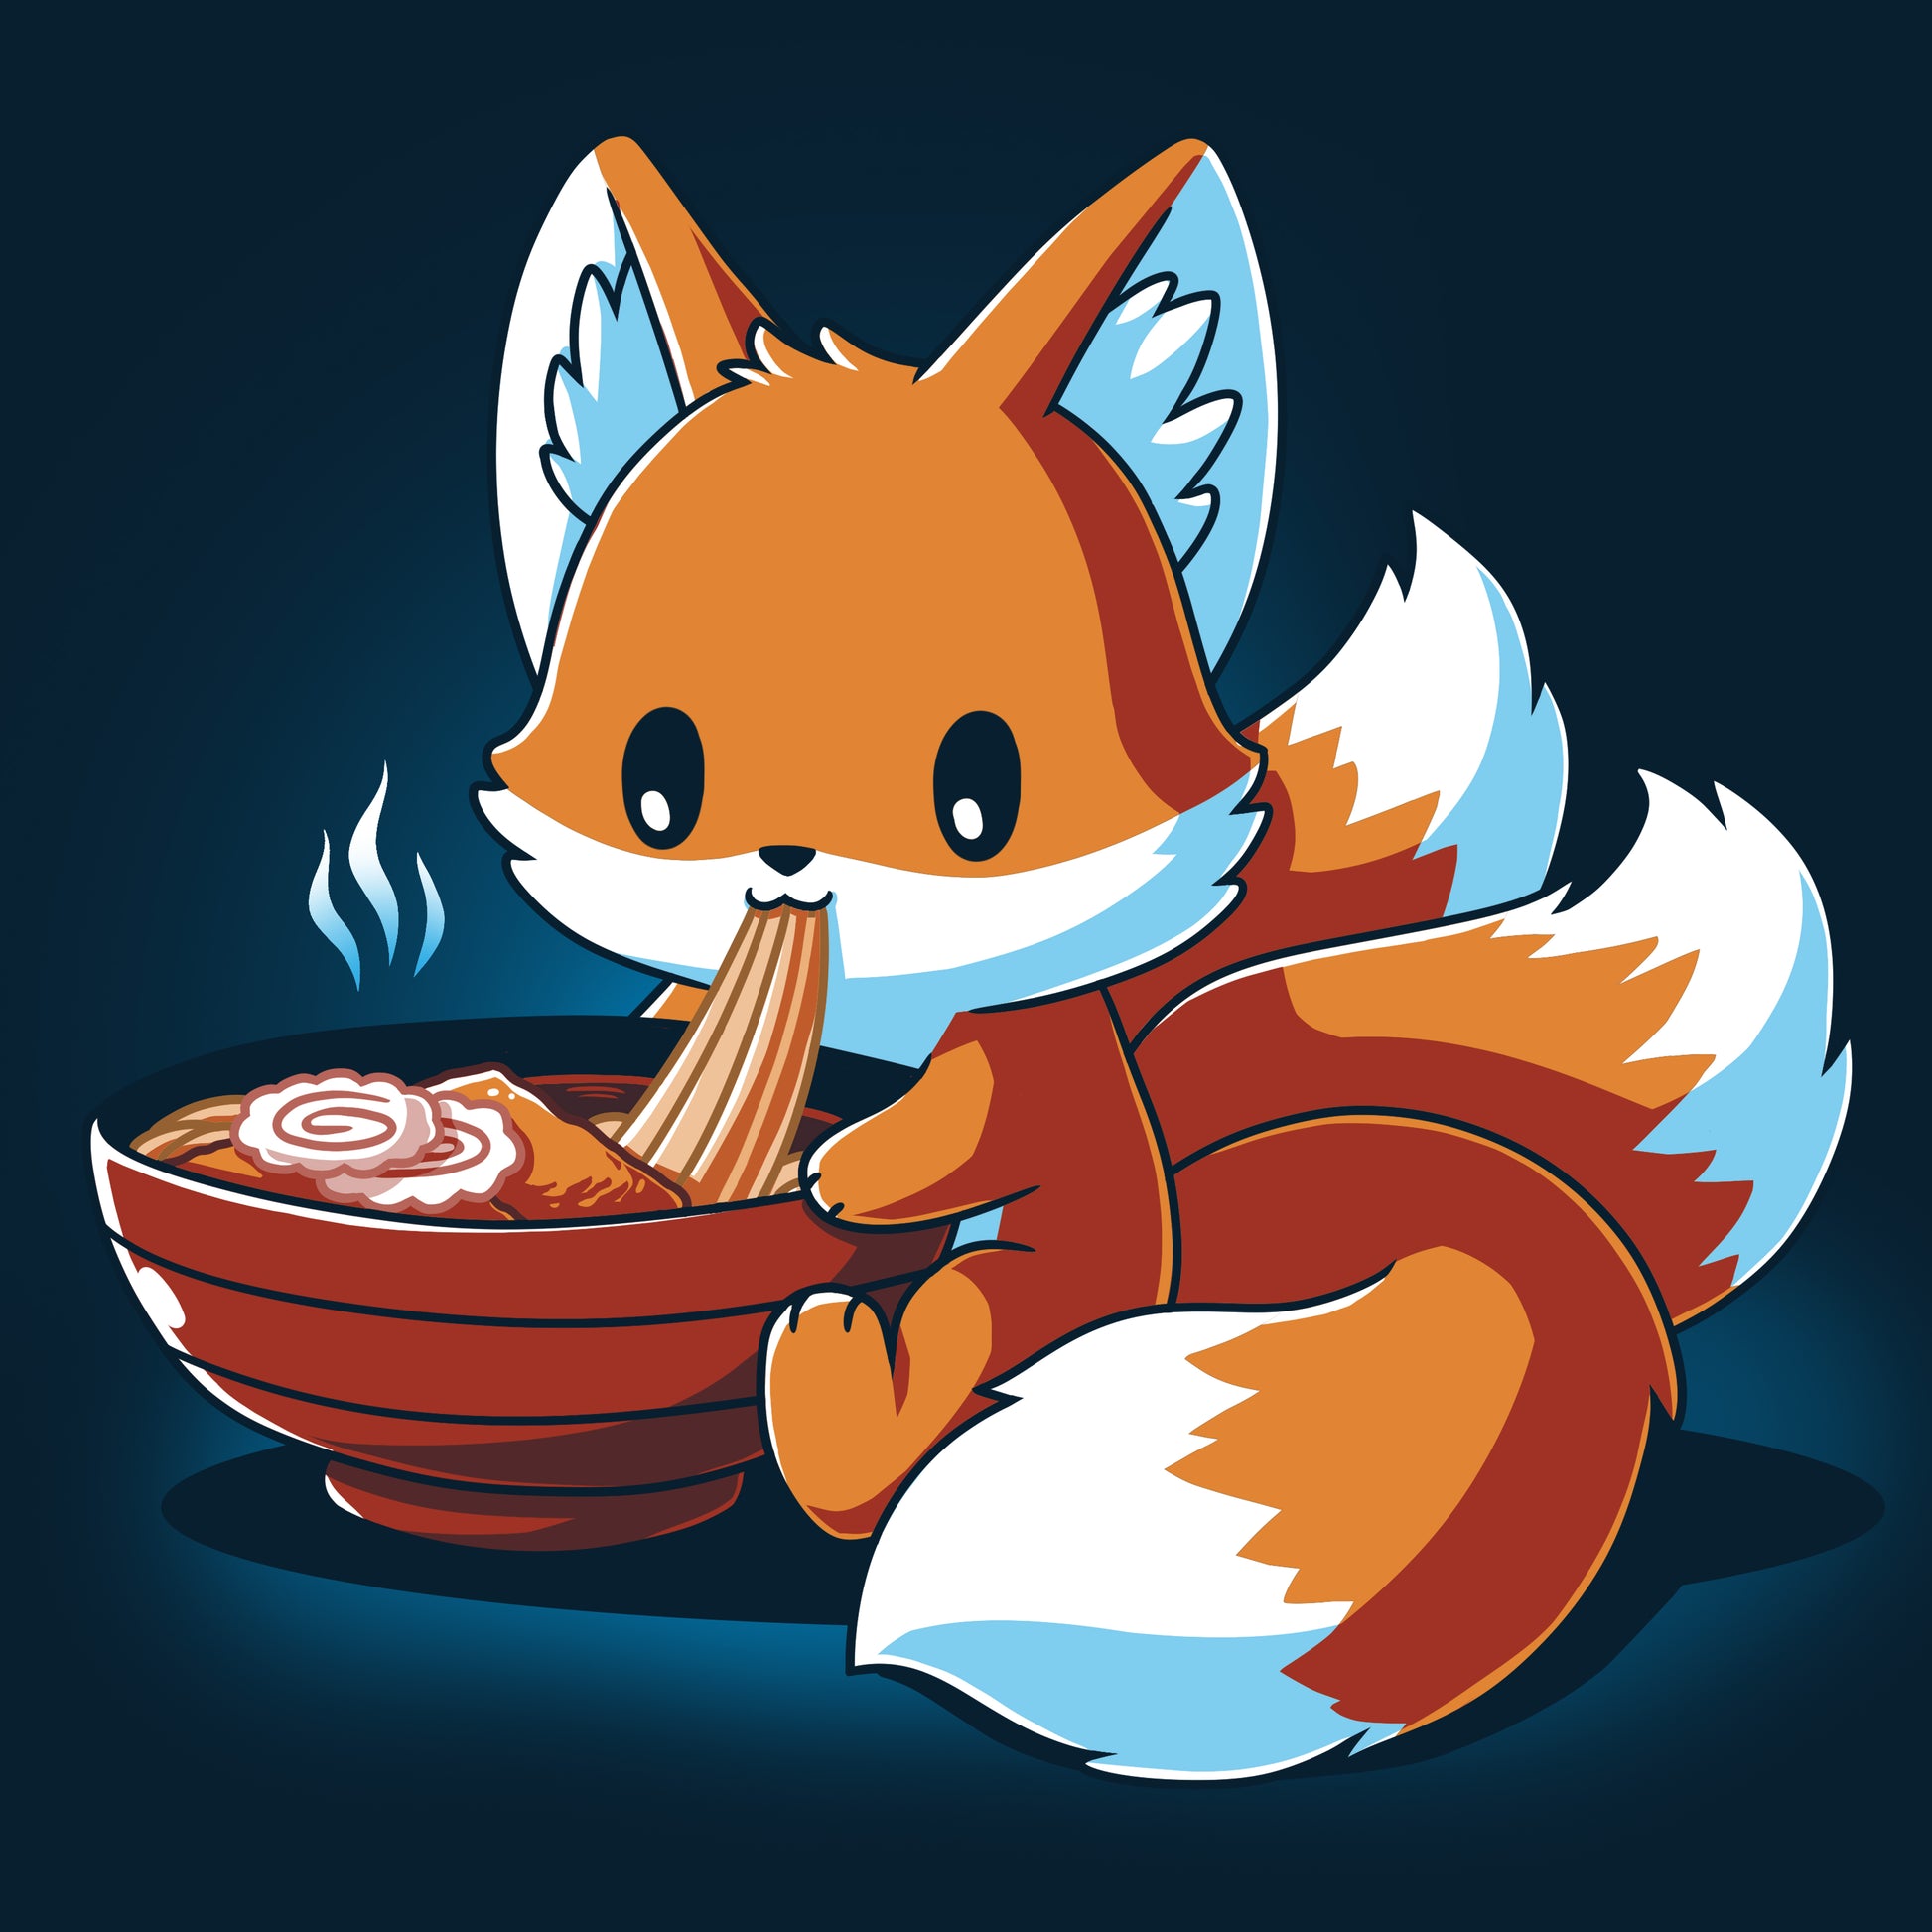 A navy blue fox enjoying TeeTurtle Ramen Kitsune in a bowl.